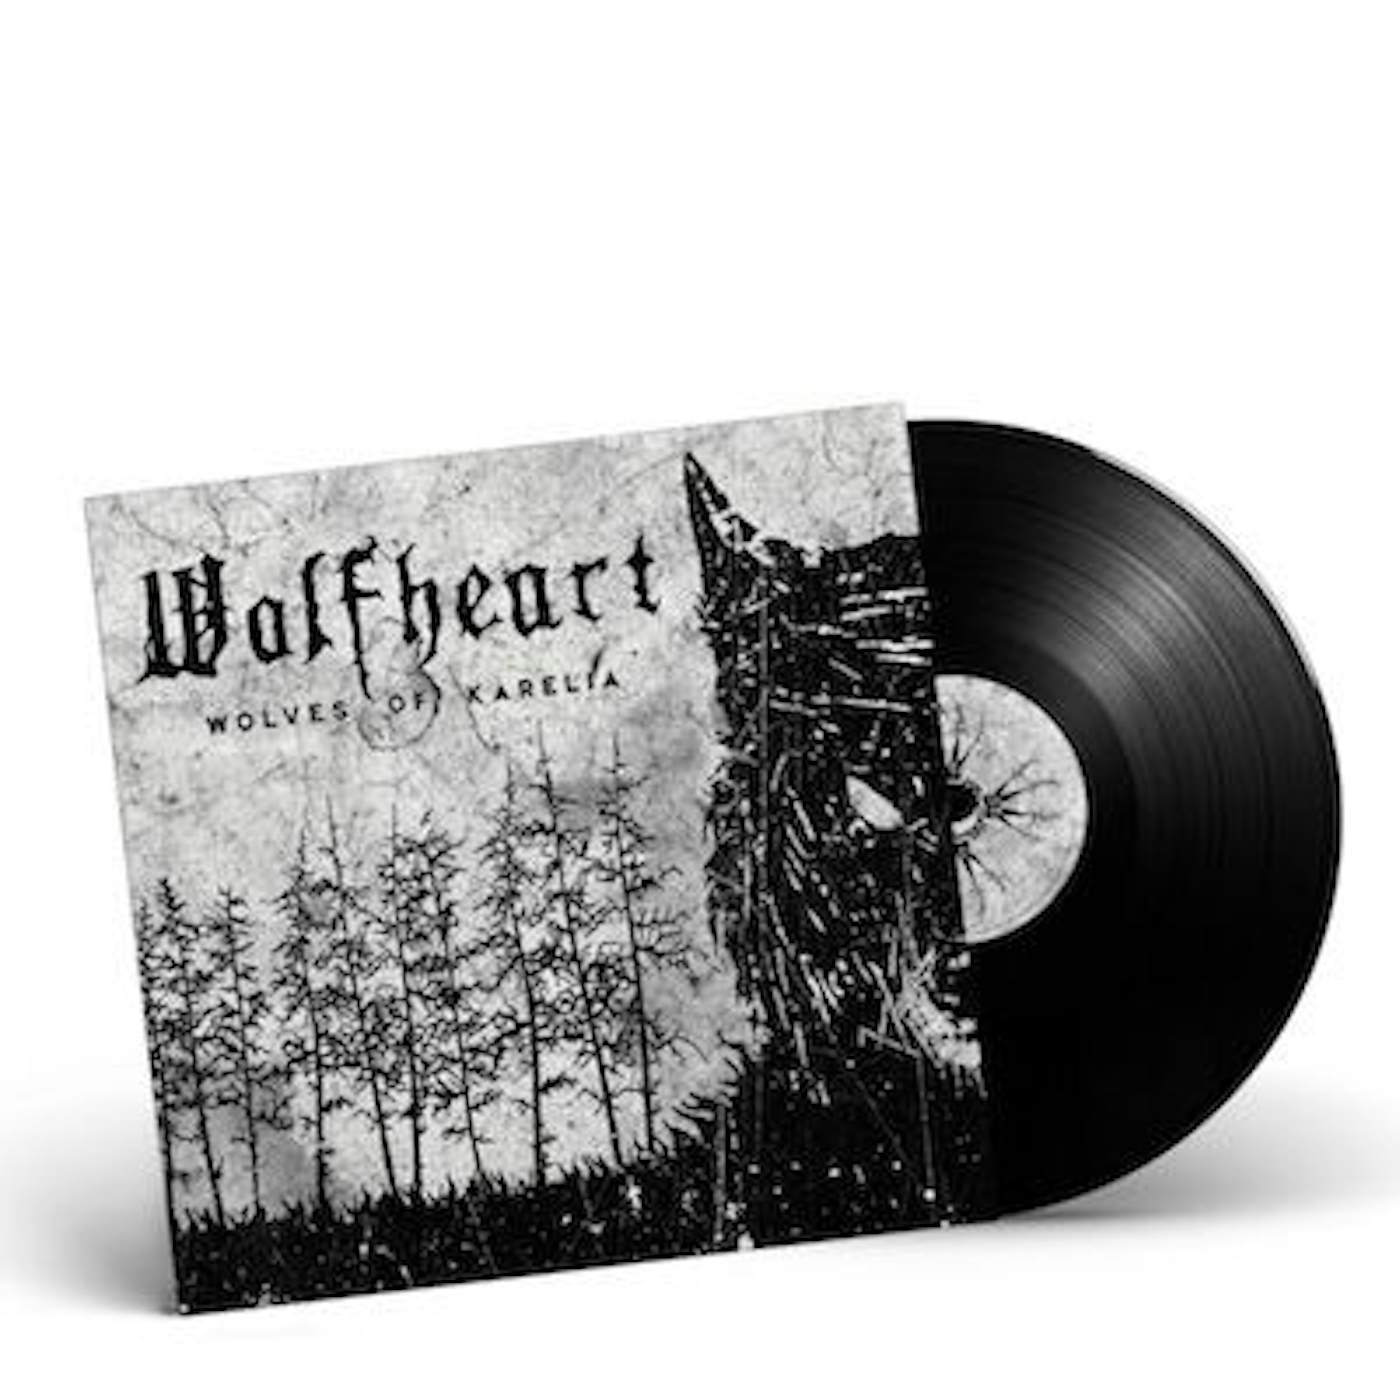 Wolfheart Wolves Of Karelia Vinyl Record